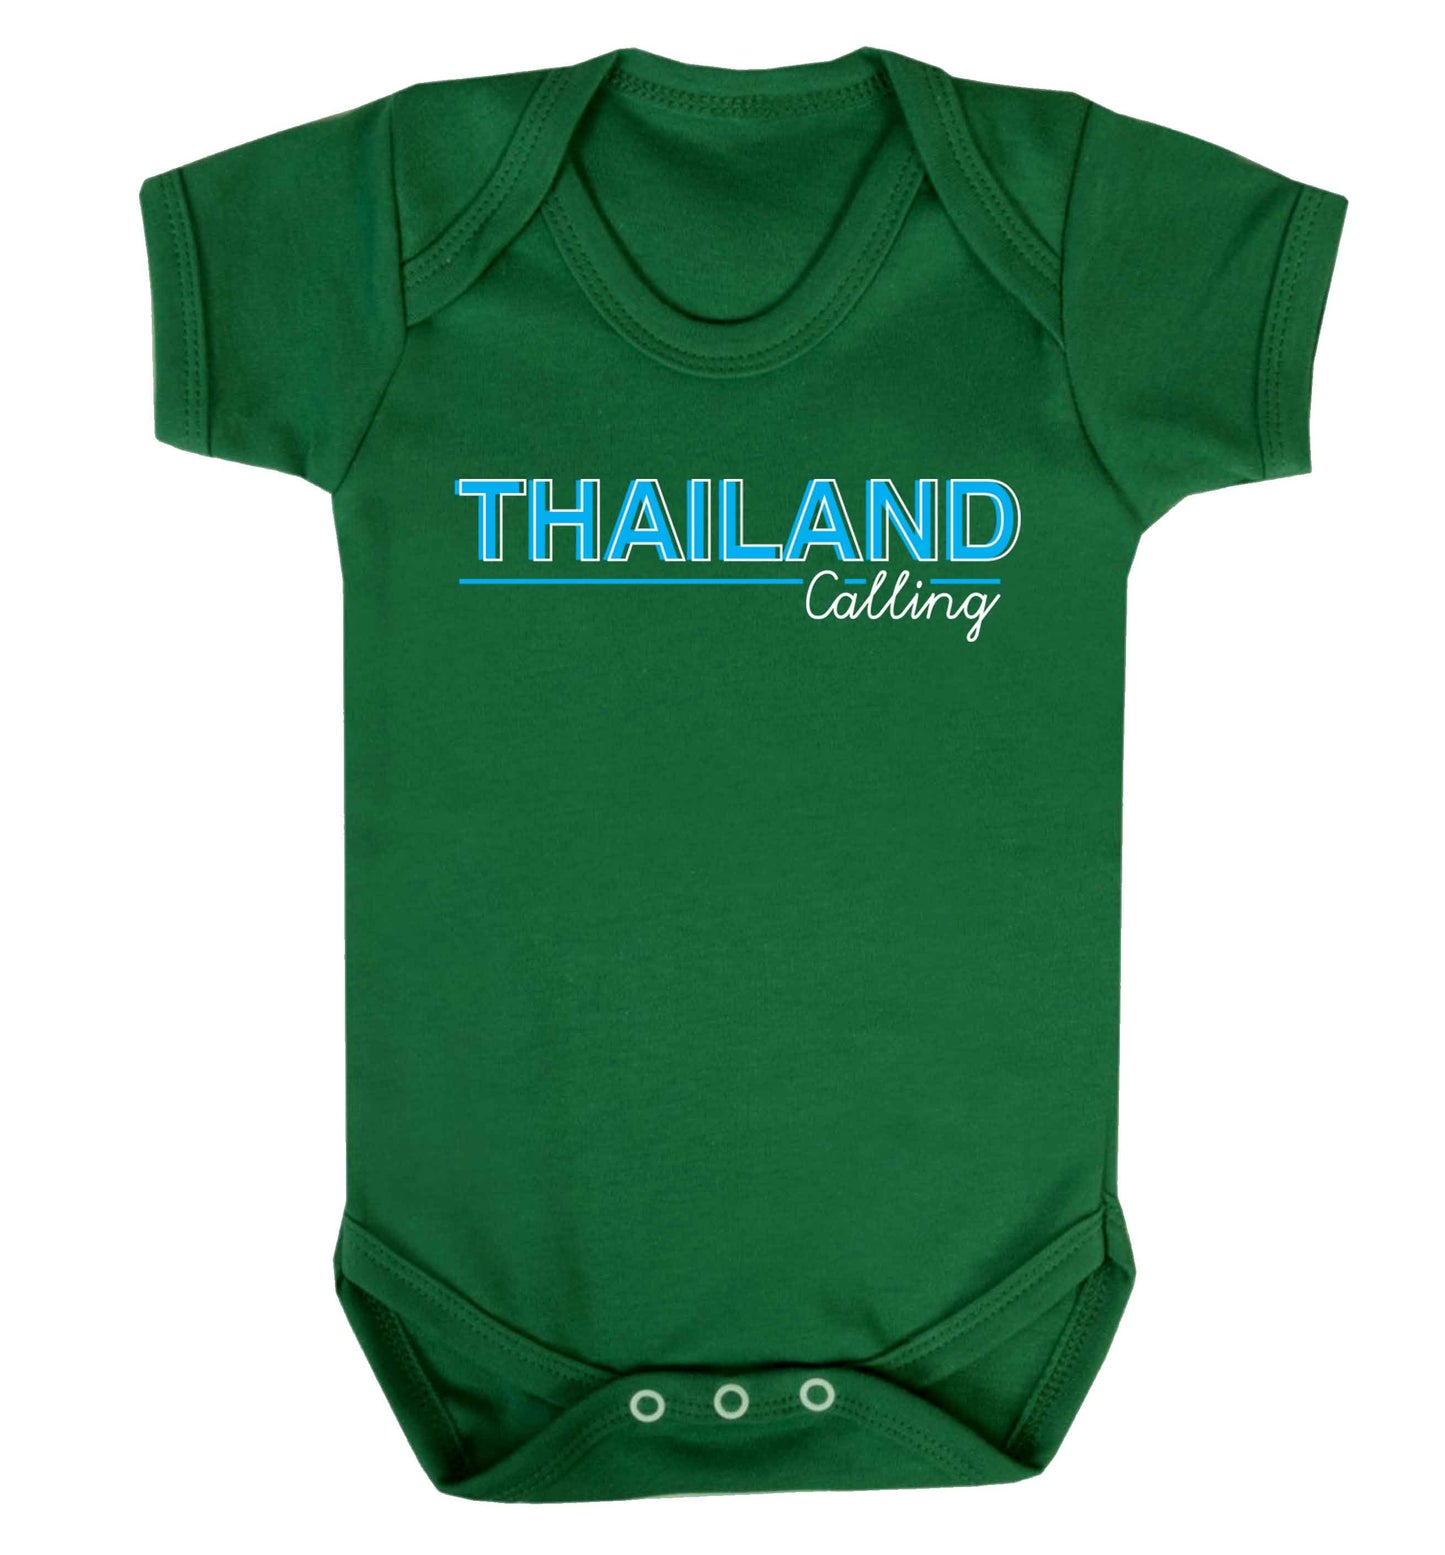 Thailand calling Baby Vest green 18-24 months